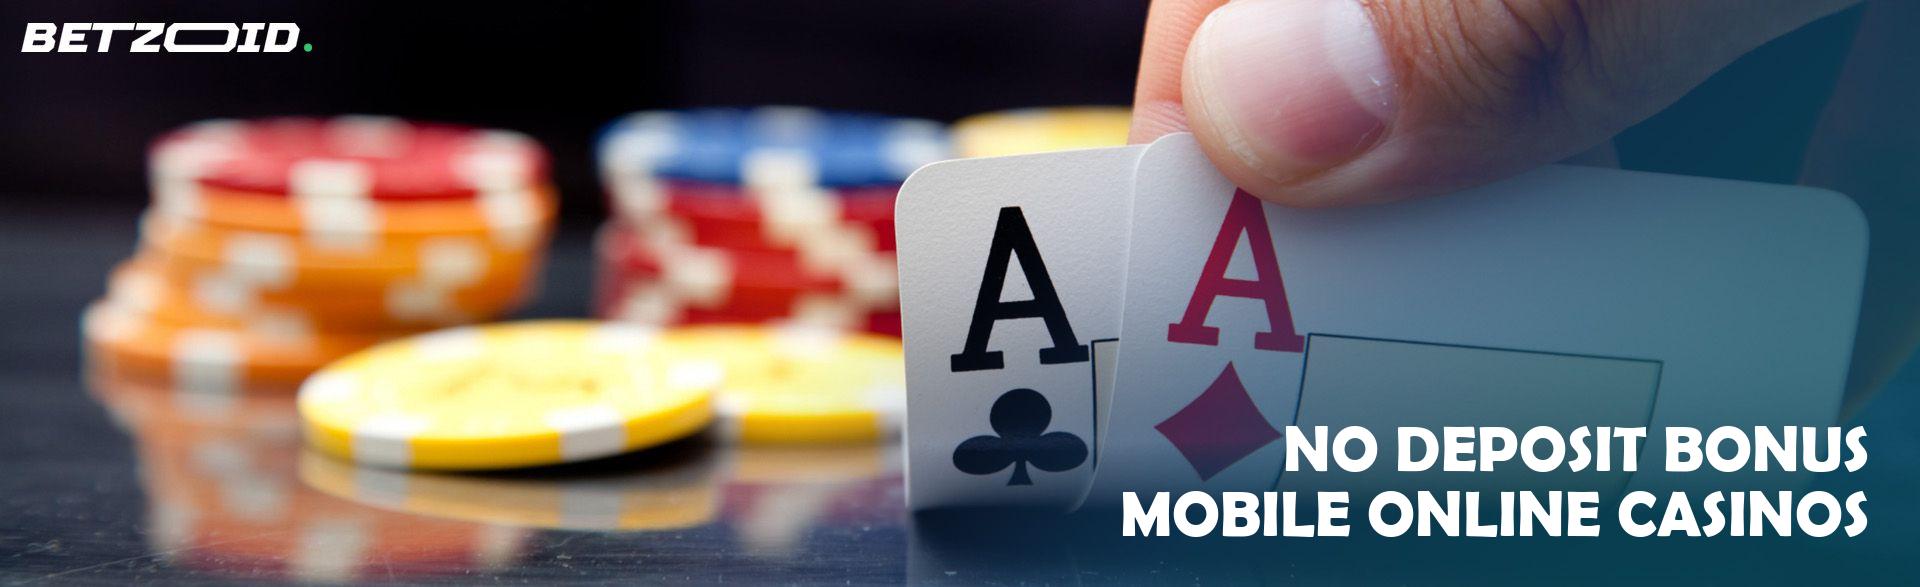 No Deposit Bonus Mobile Online Casinos.